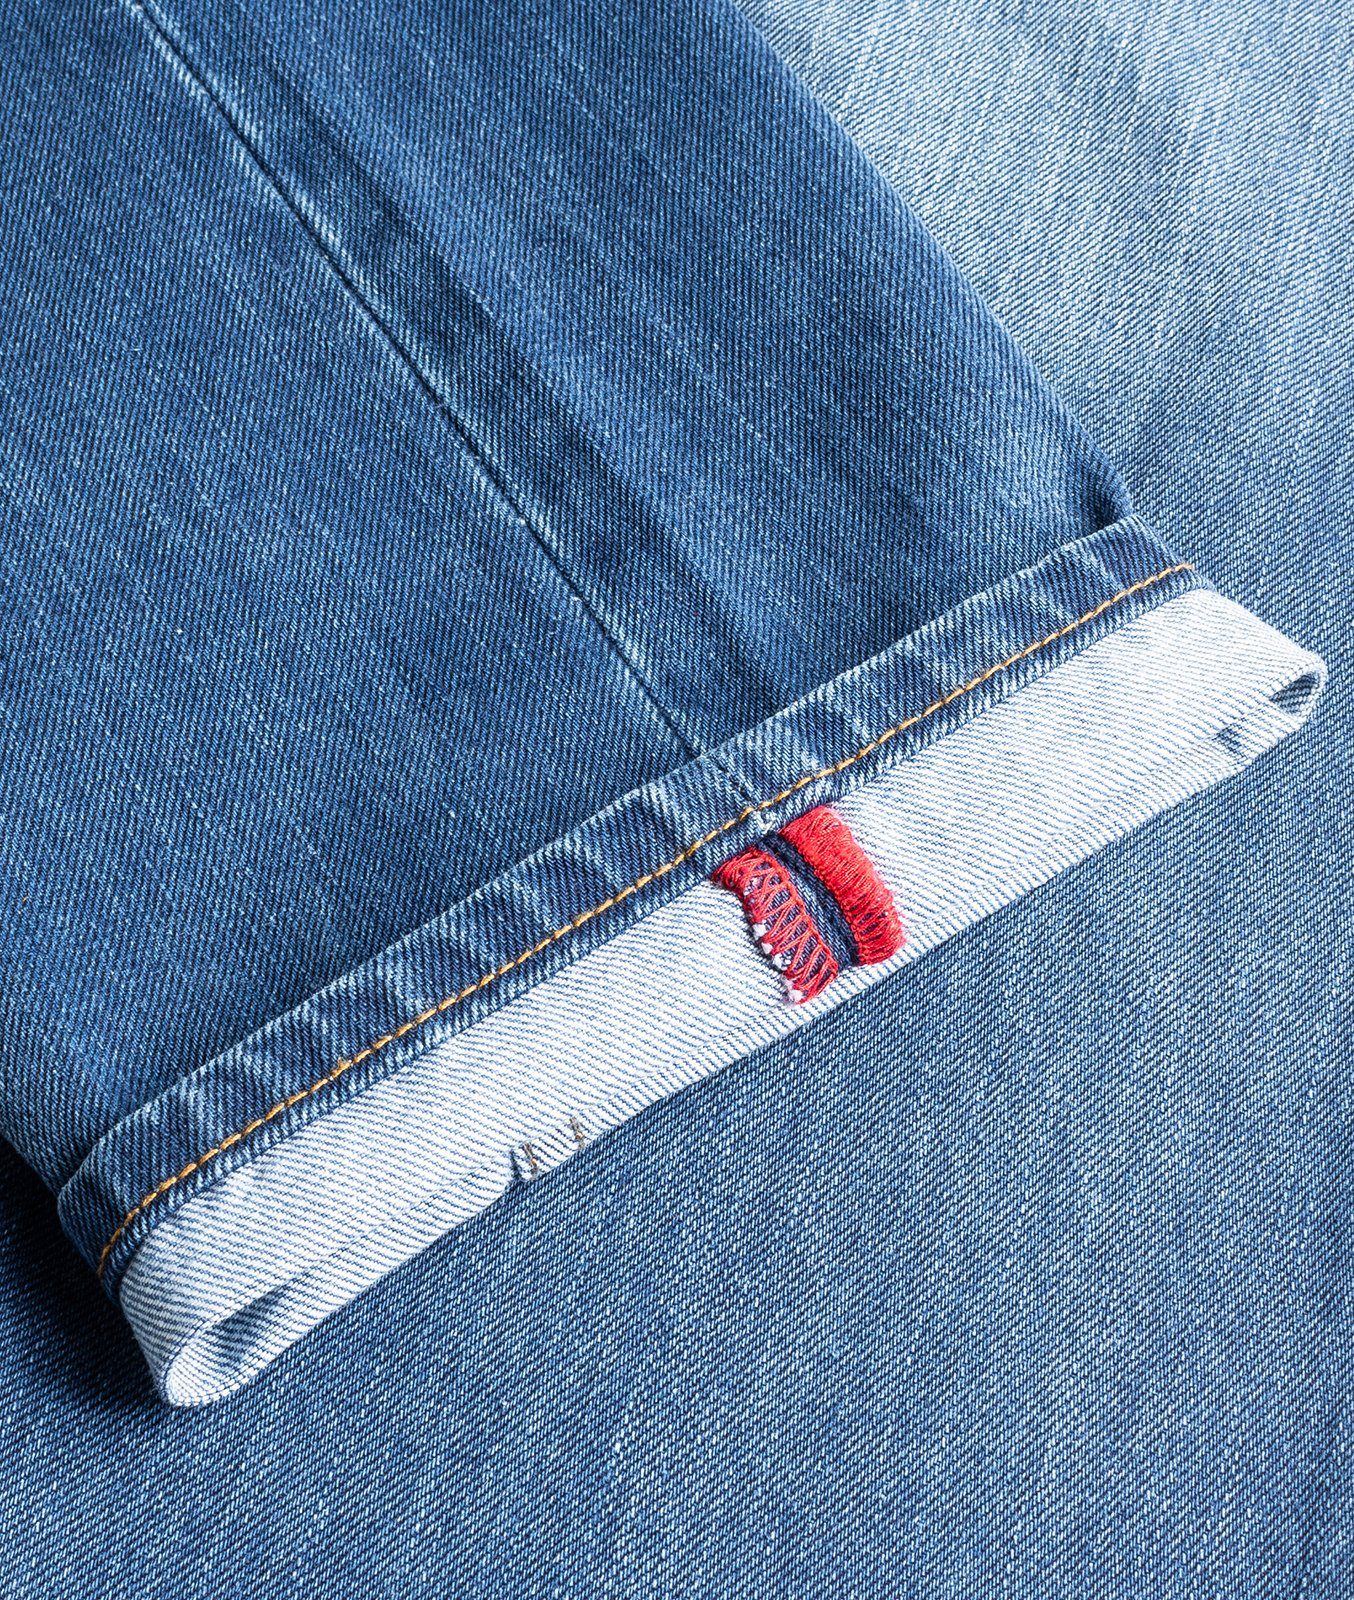 Indumentum Straight-Jeans Herren IC-701 Comfort Jeans Fit